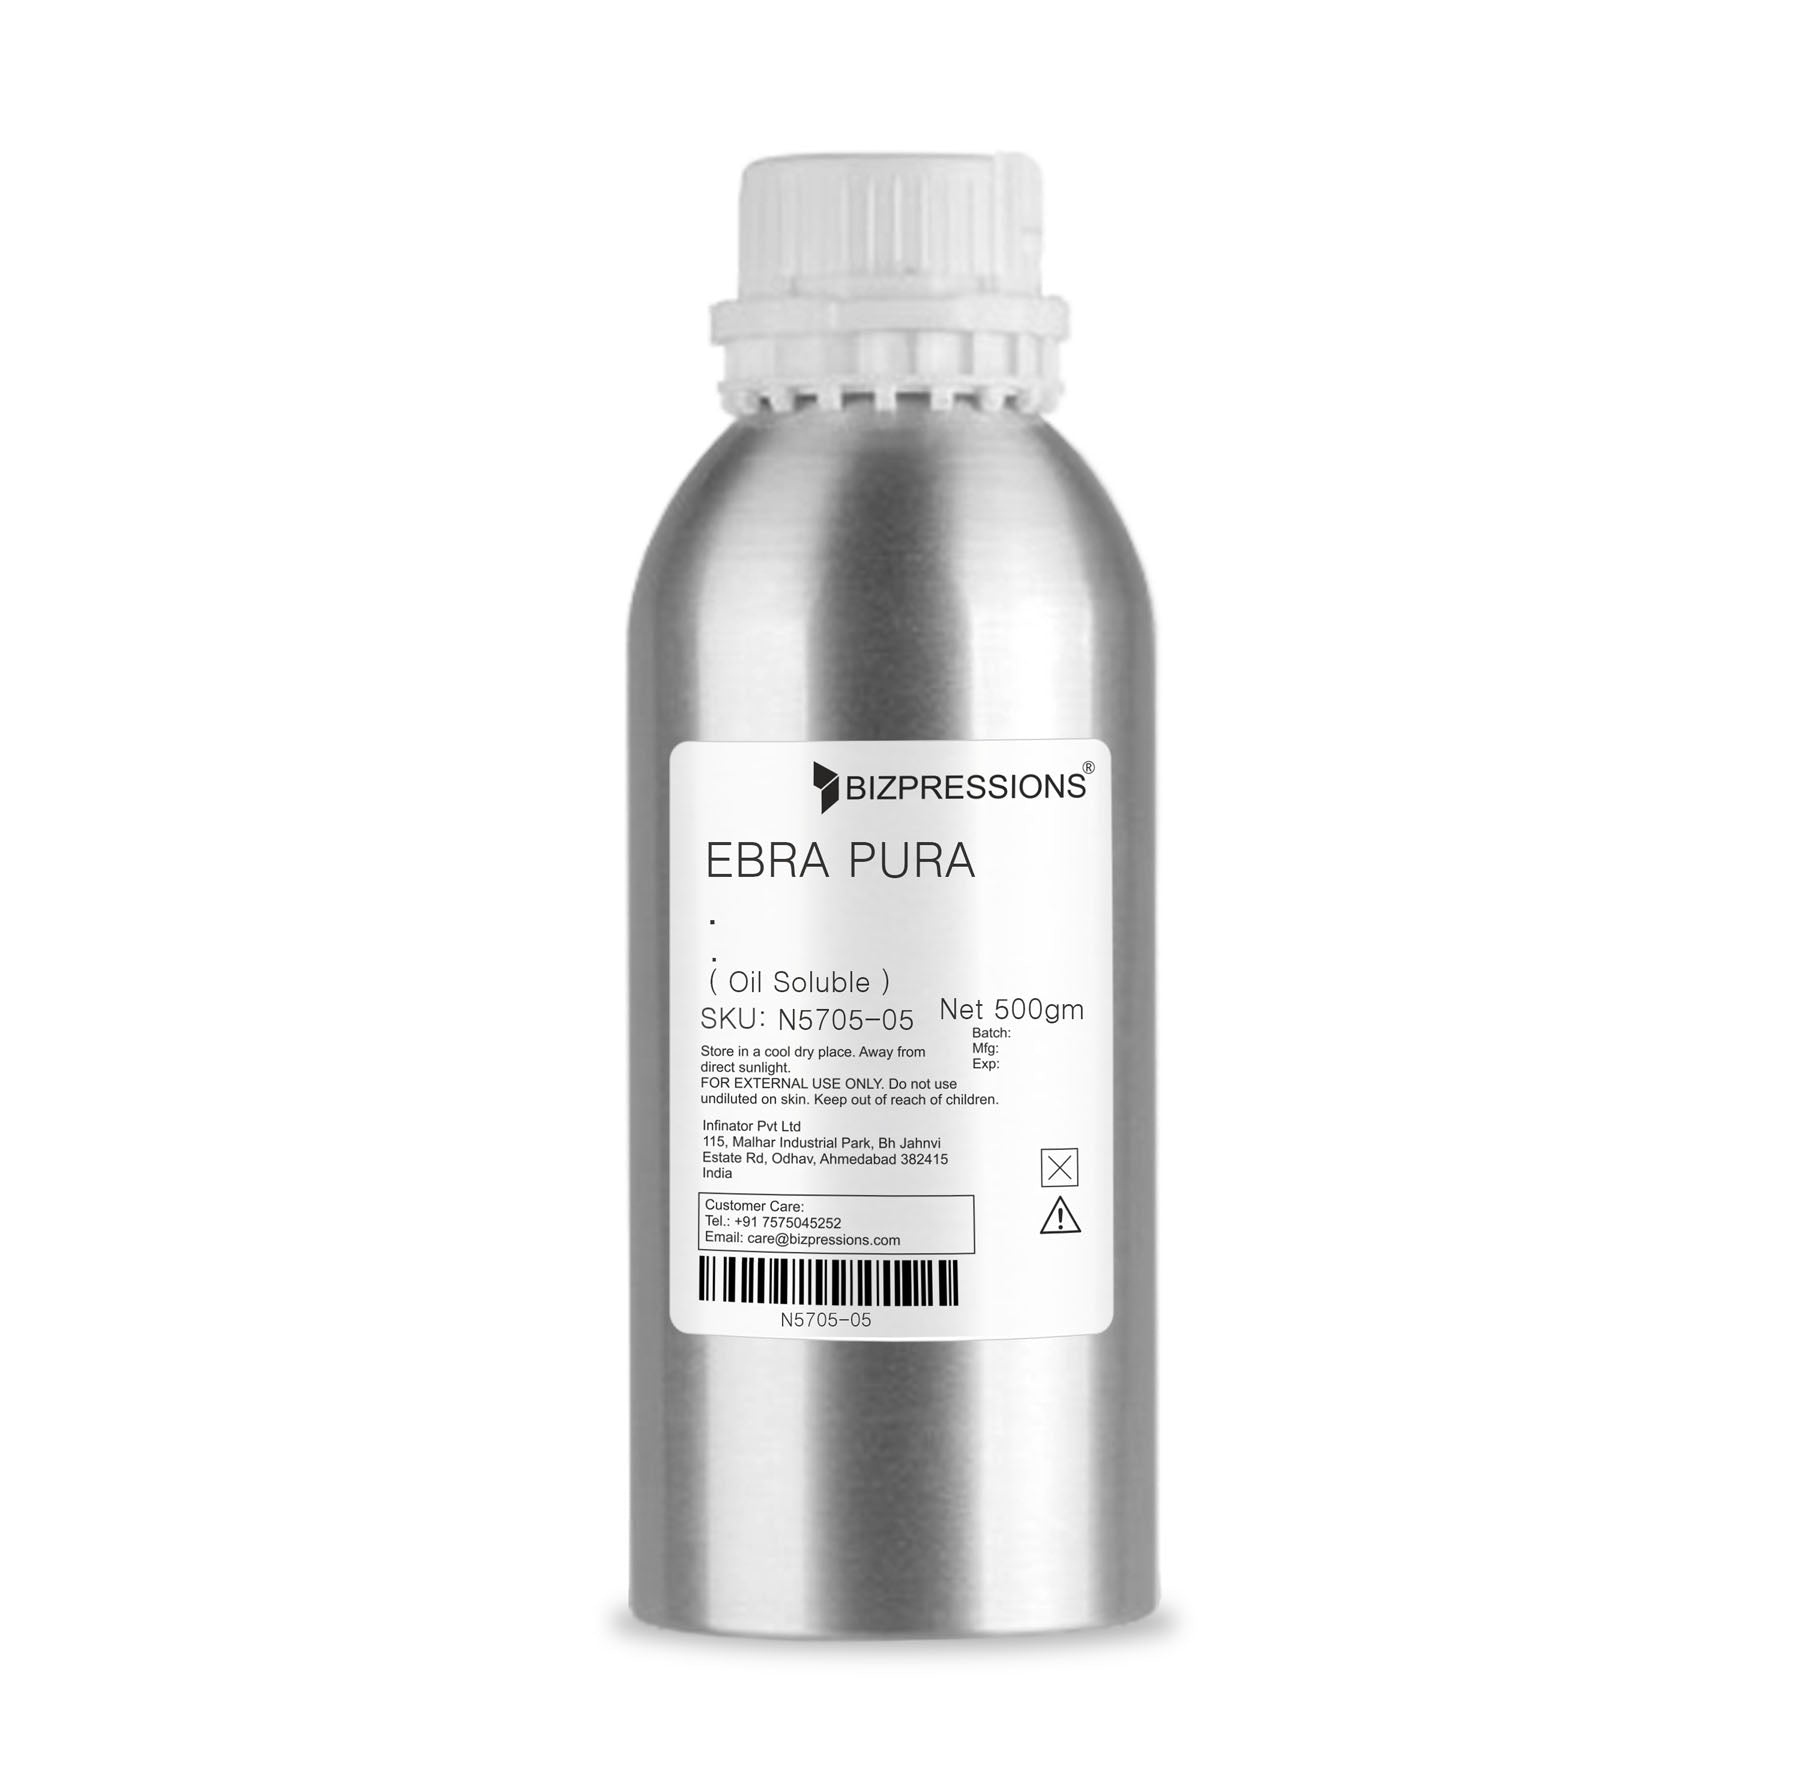 EBRA PURA - Fragrance ( Oil Soluble ) - 500 gm